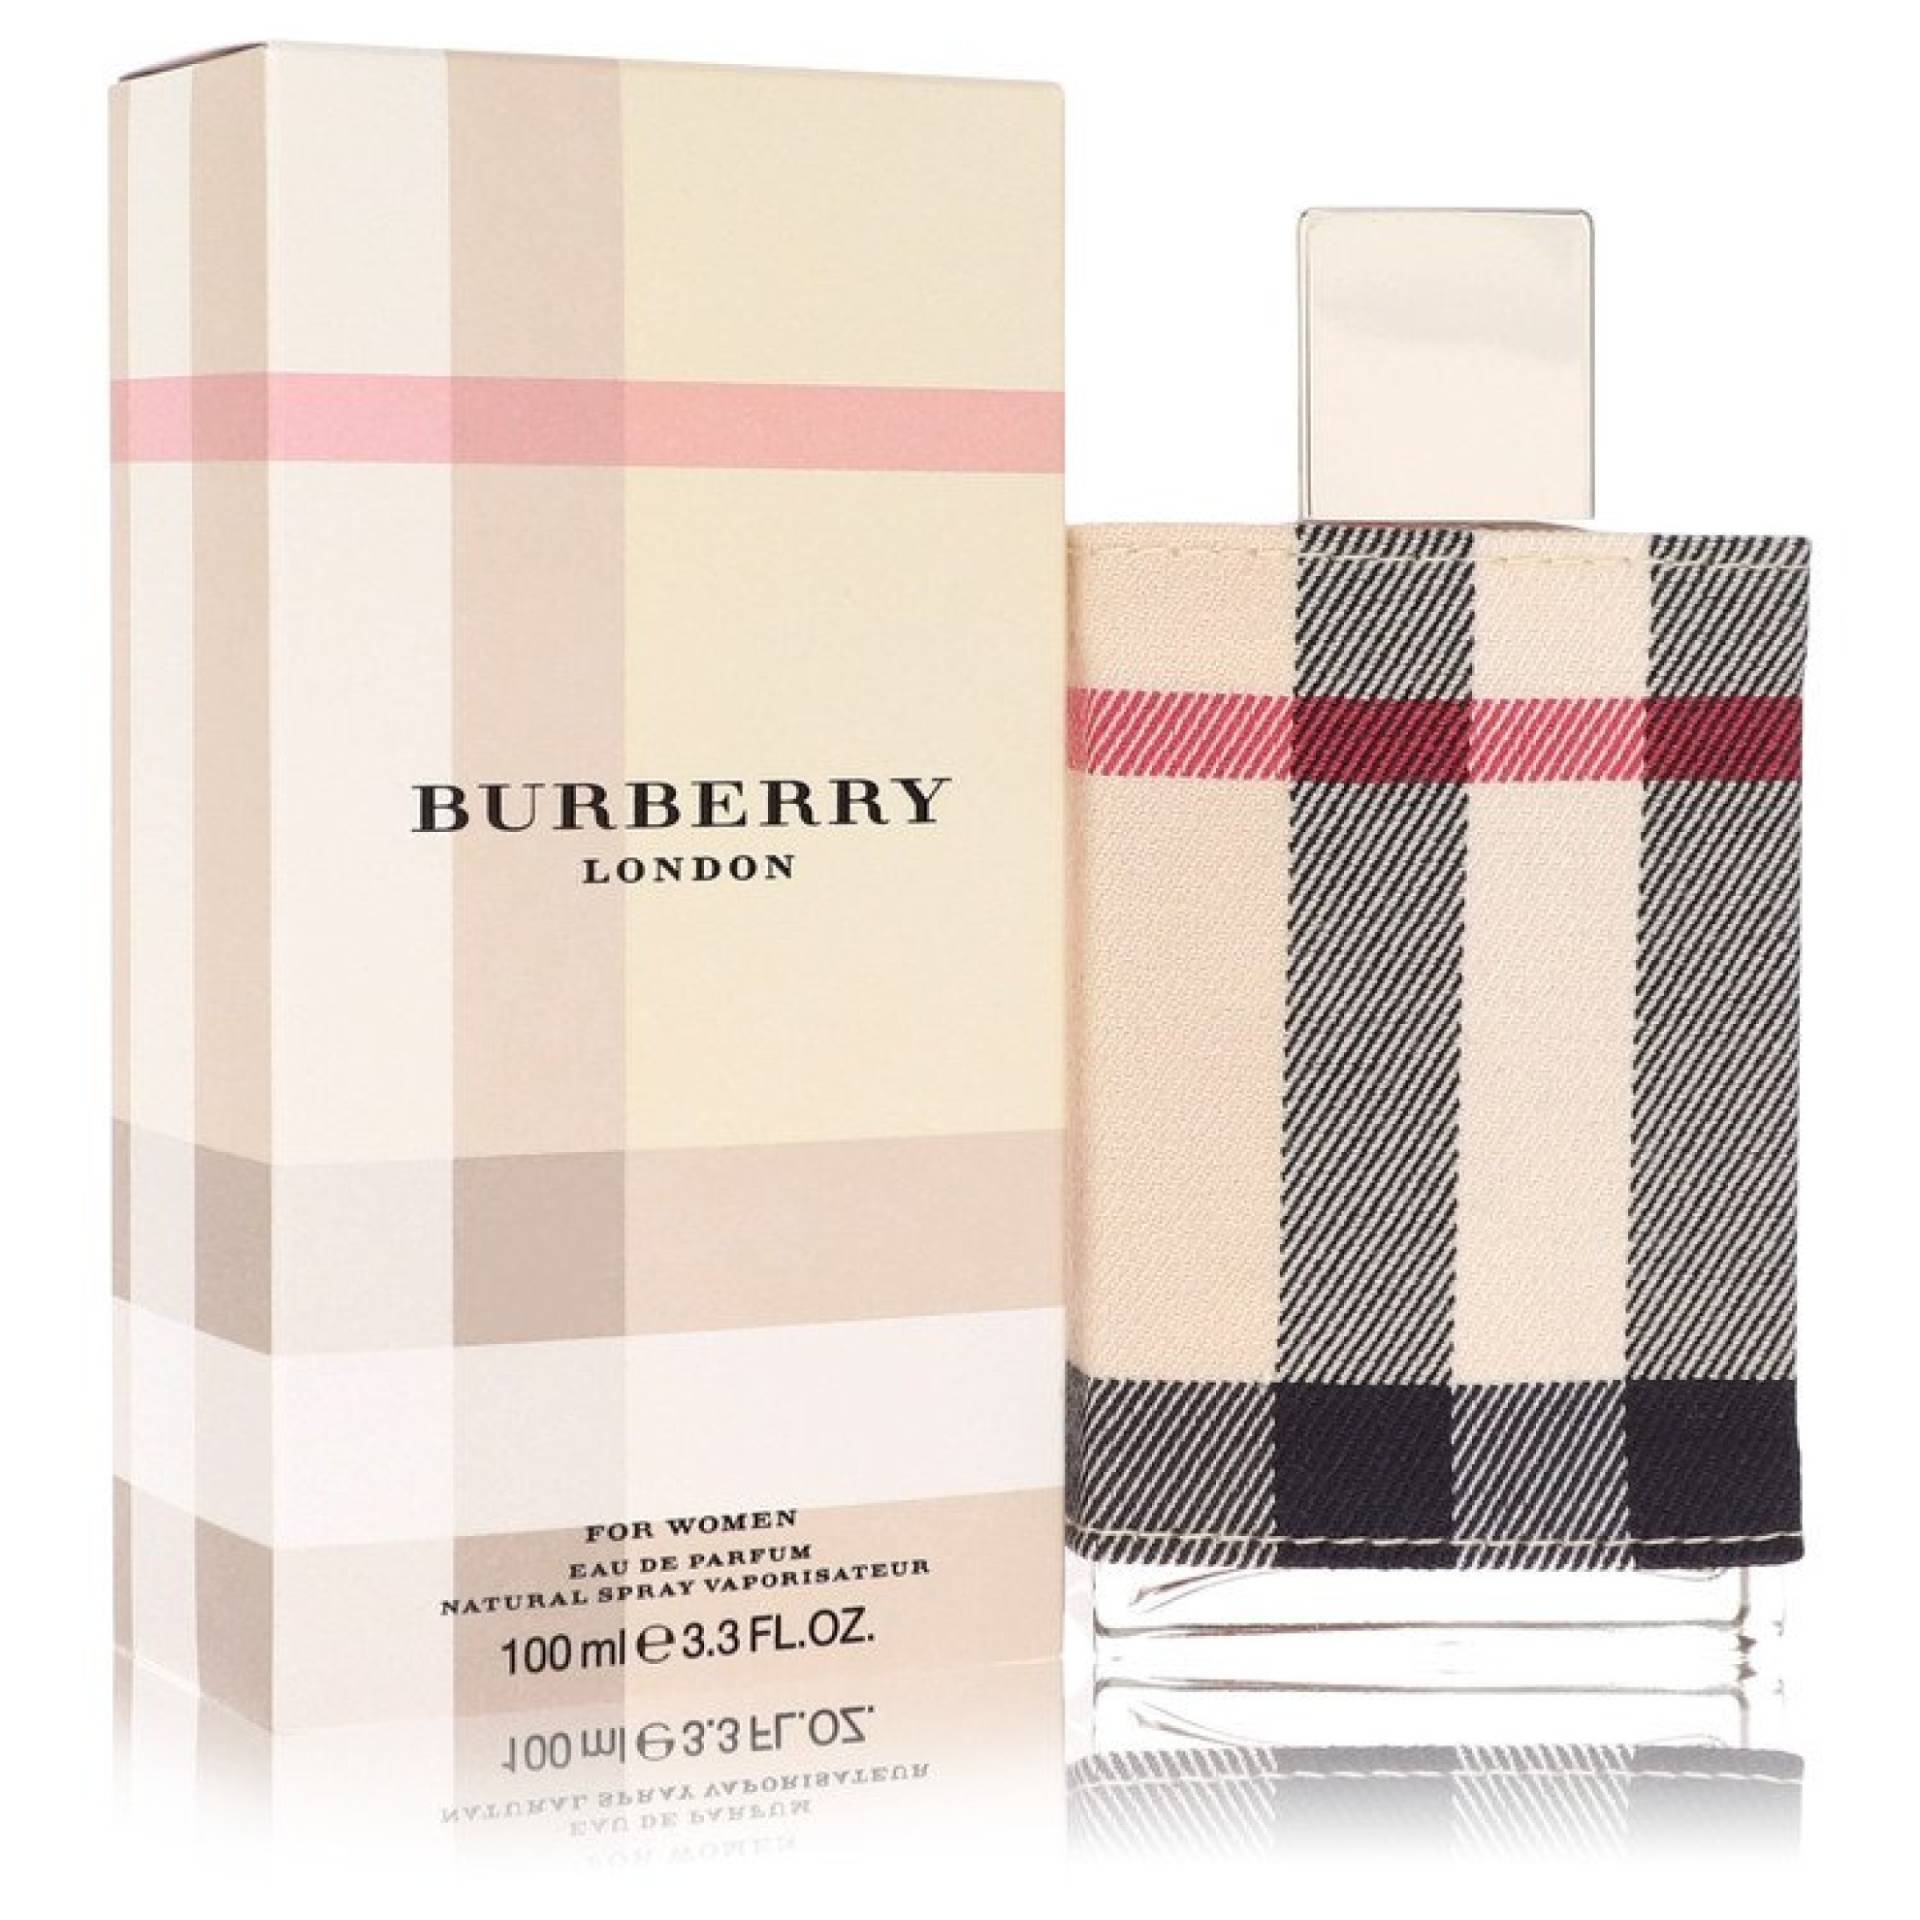 Burberry London (New) Eau De Parfum Spray 100 ml von Burberry